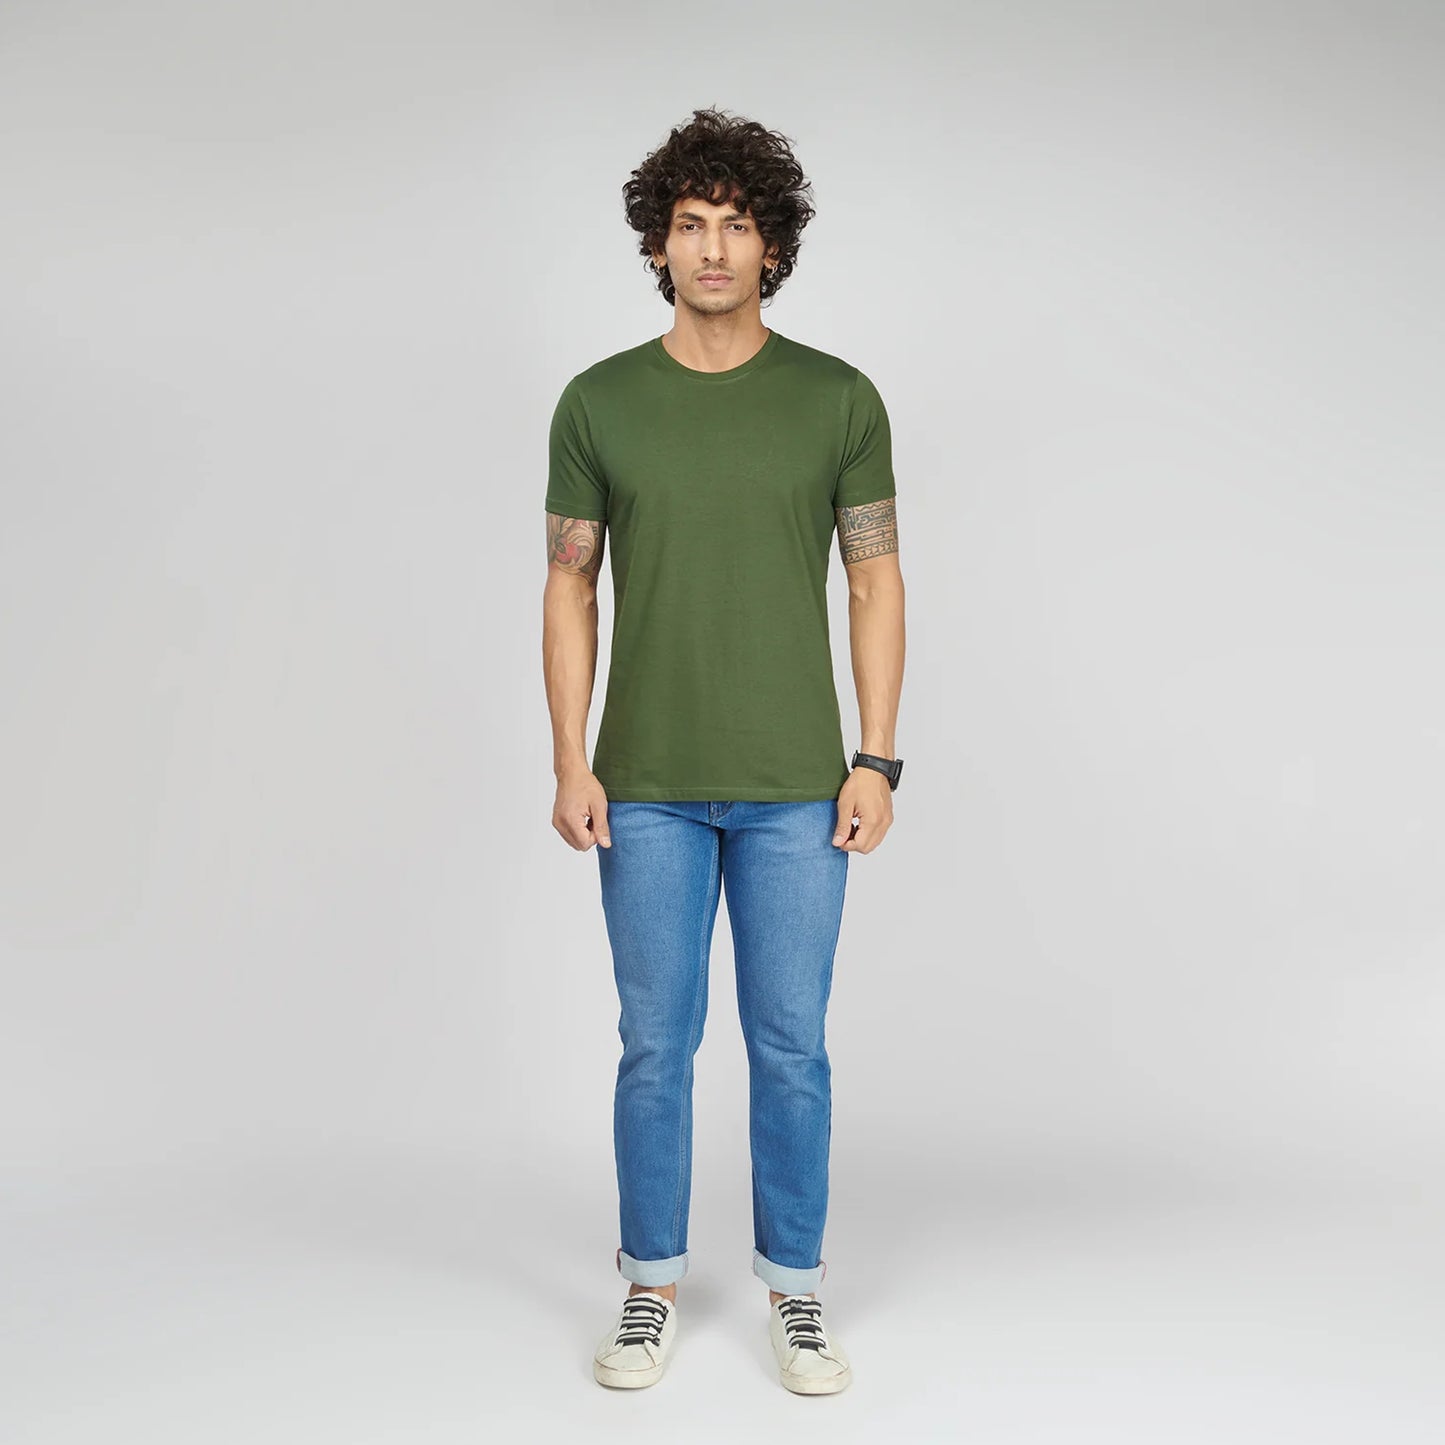 Basic Army Green Half Sleeves T-Shirt